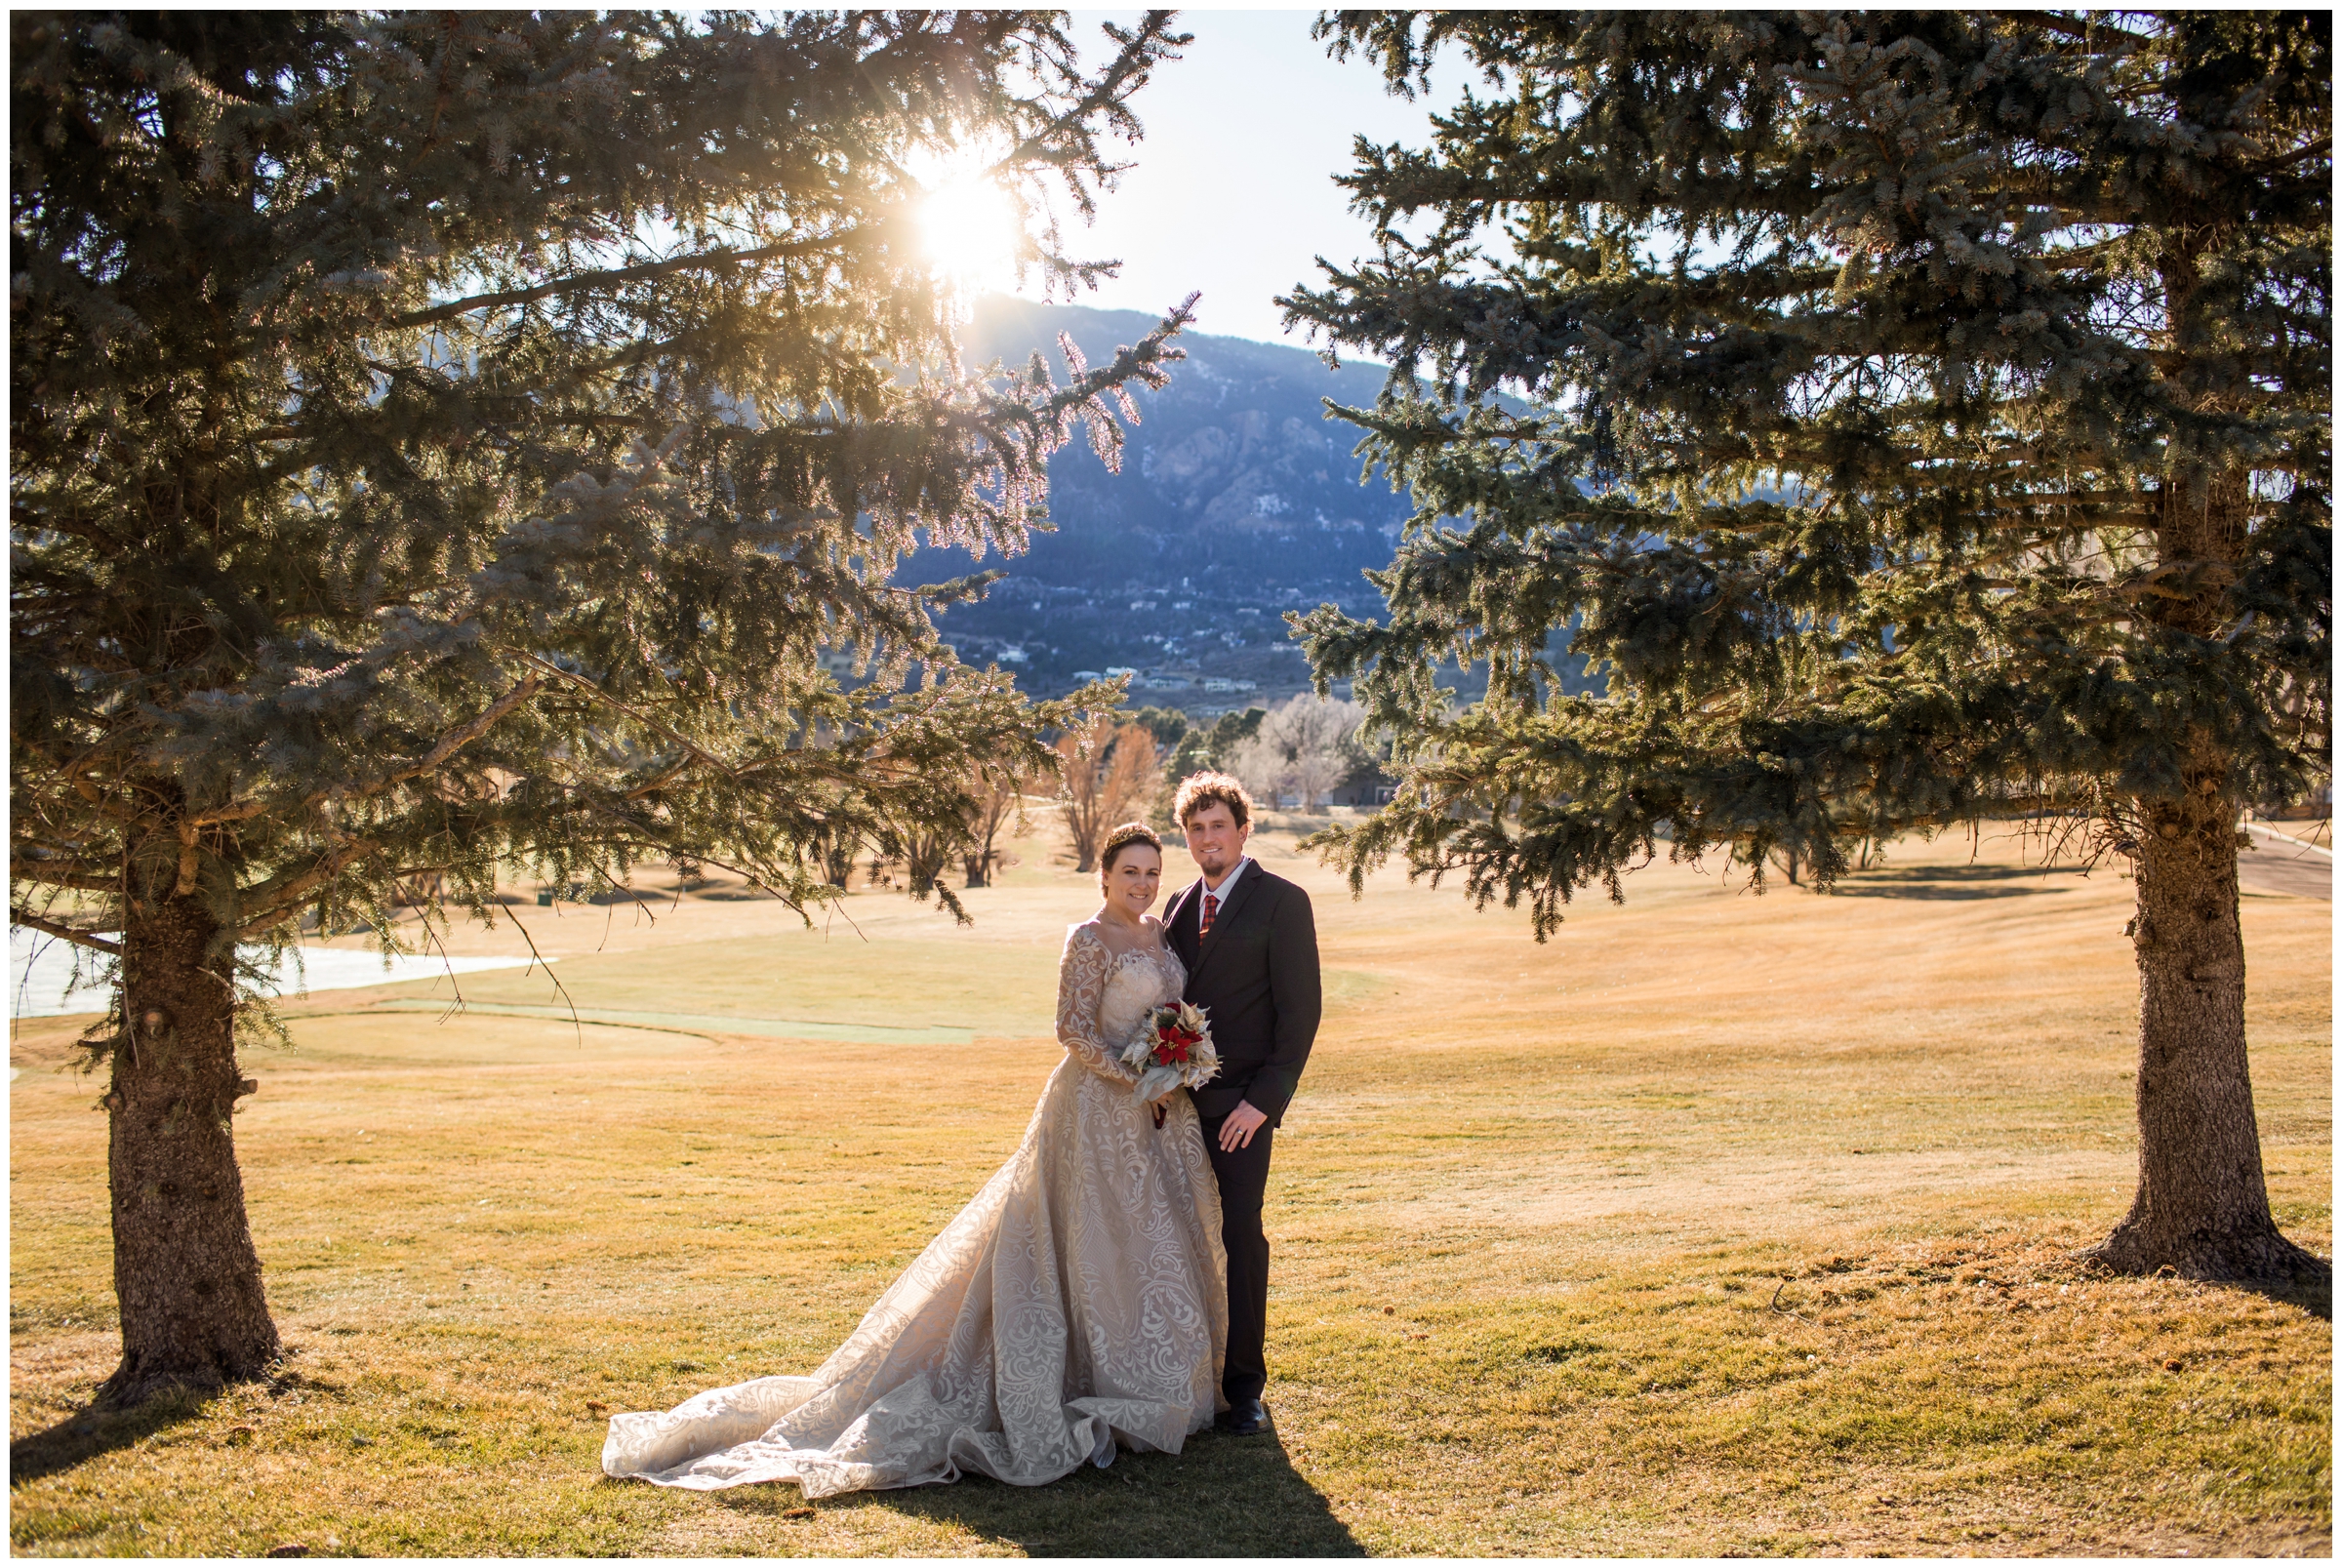 Cheyenne Mountain Resort wedding photos by Colorado Springs photographer Plum Pretty Photography